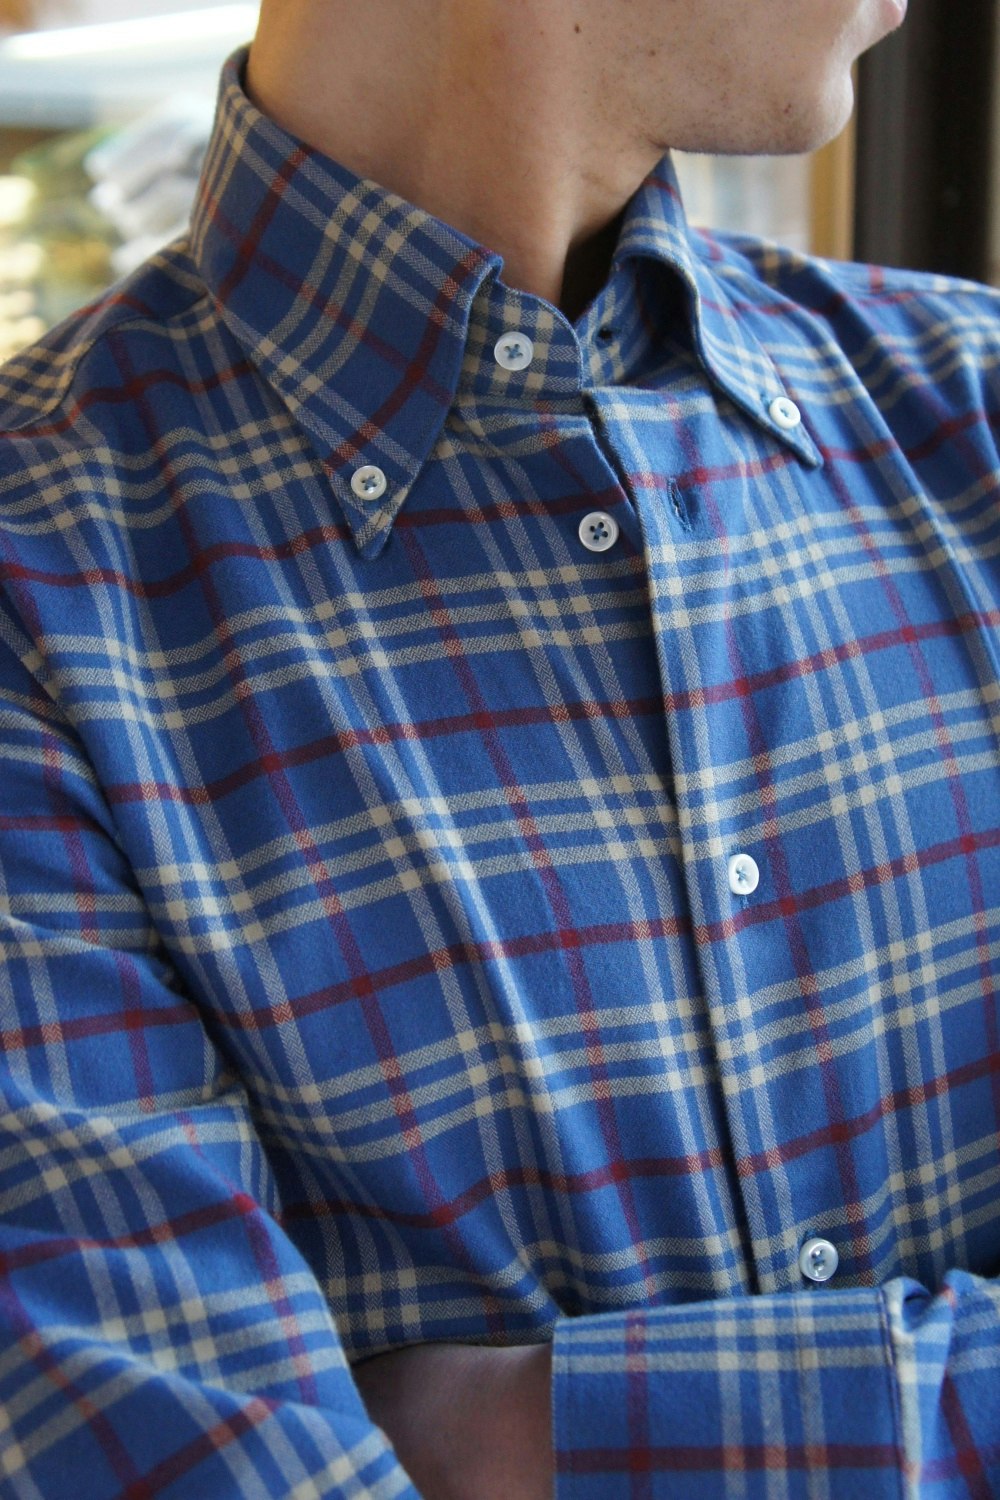 Check Flannel Shirt - Button Down - Light Navy Blue/Beige/Burgundy